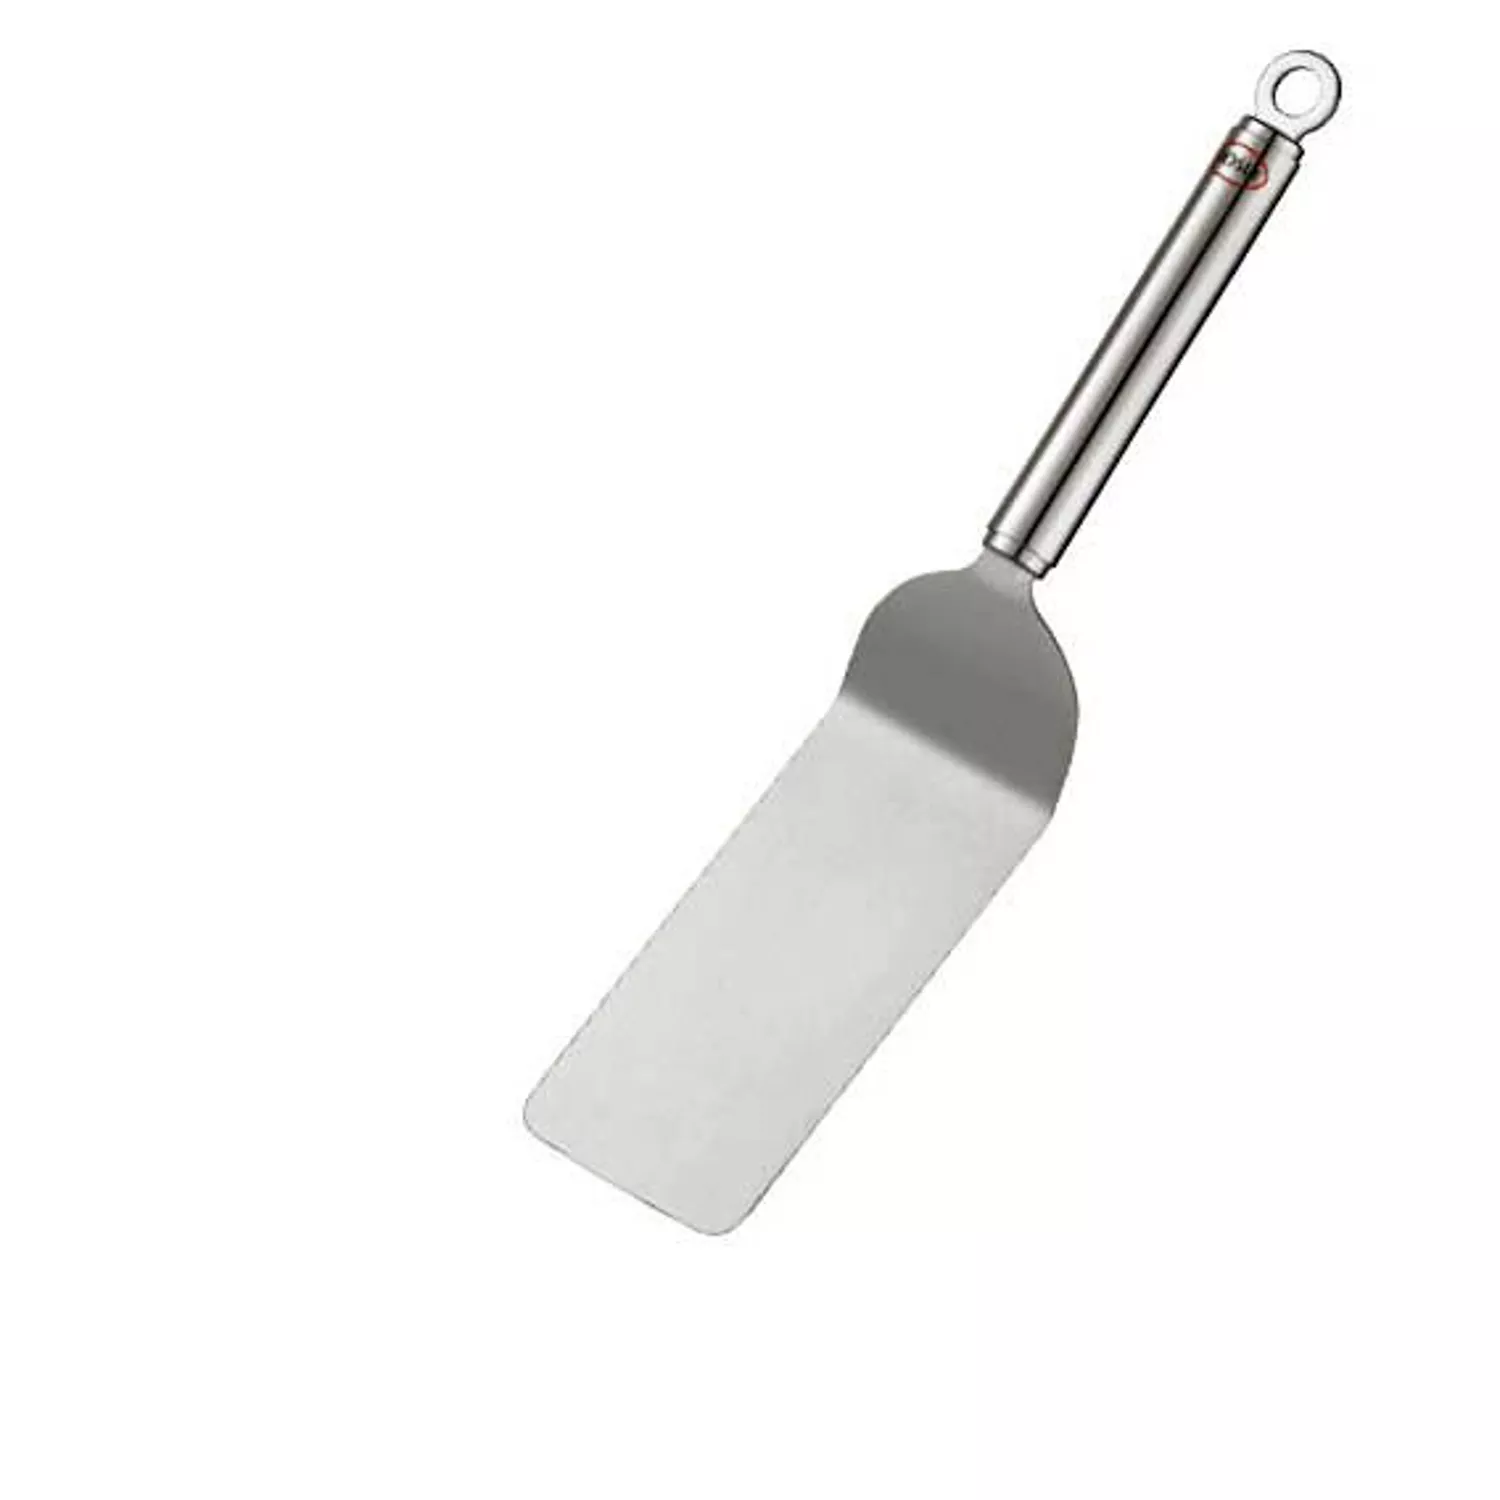 Slotted angle spatula